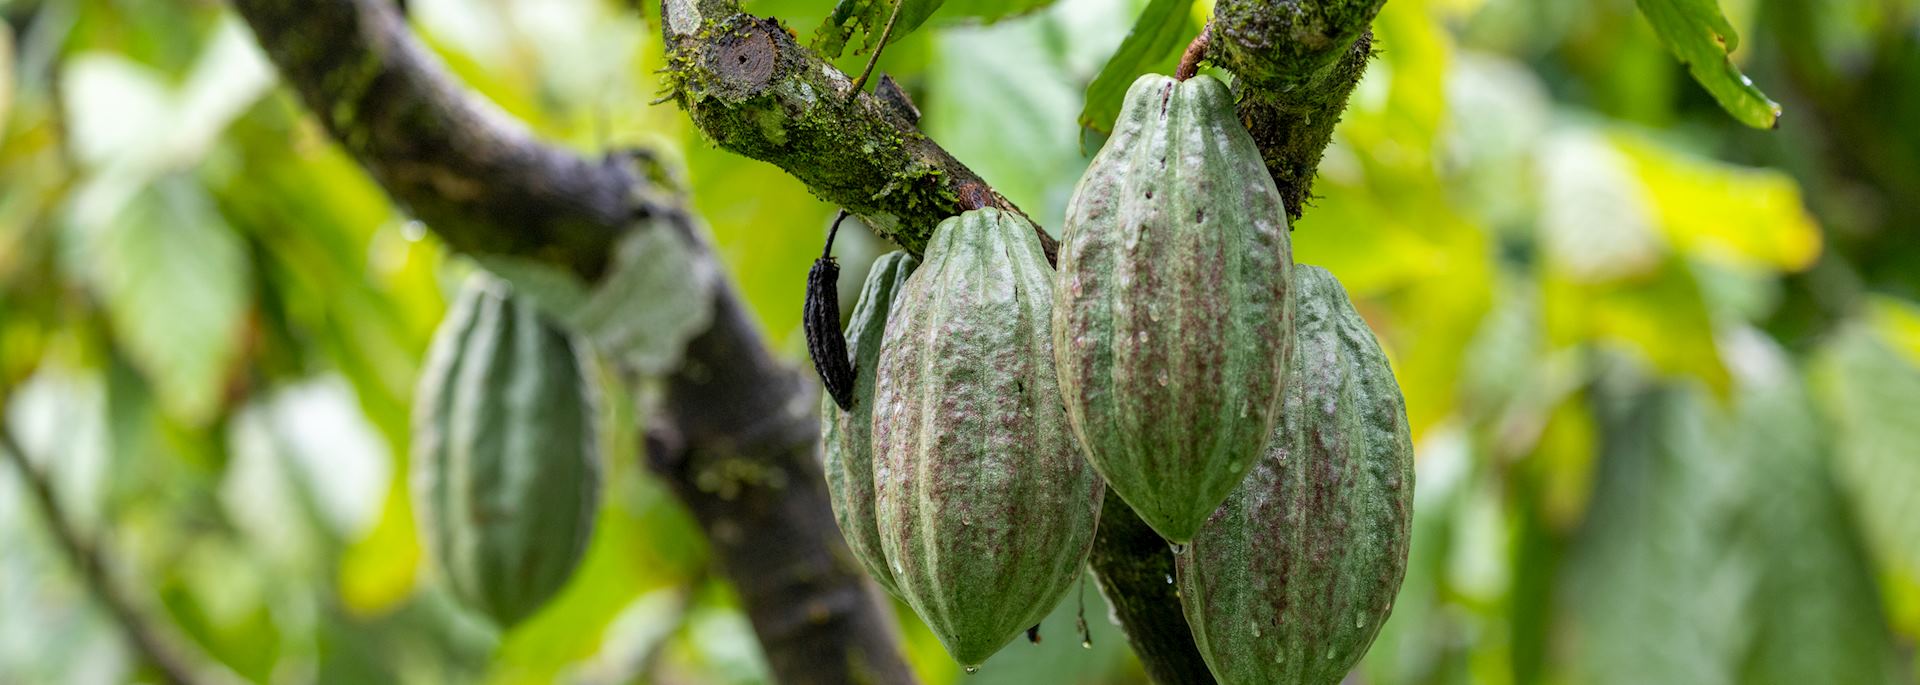 Cocoa plantation